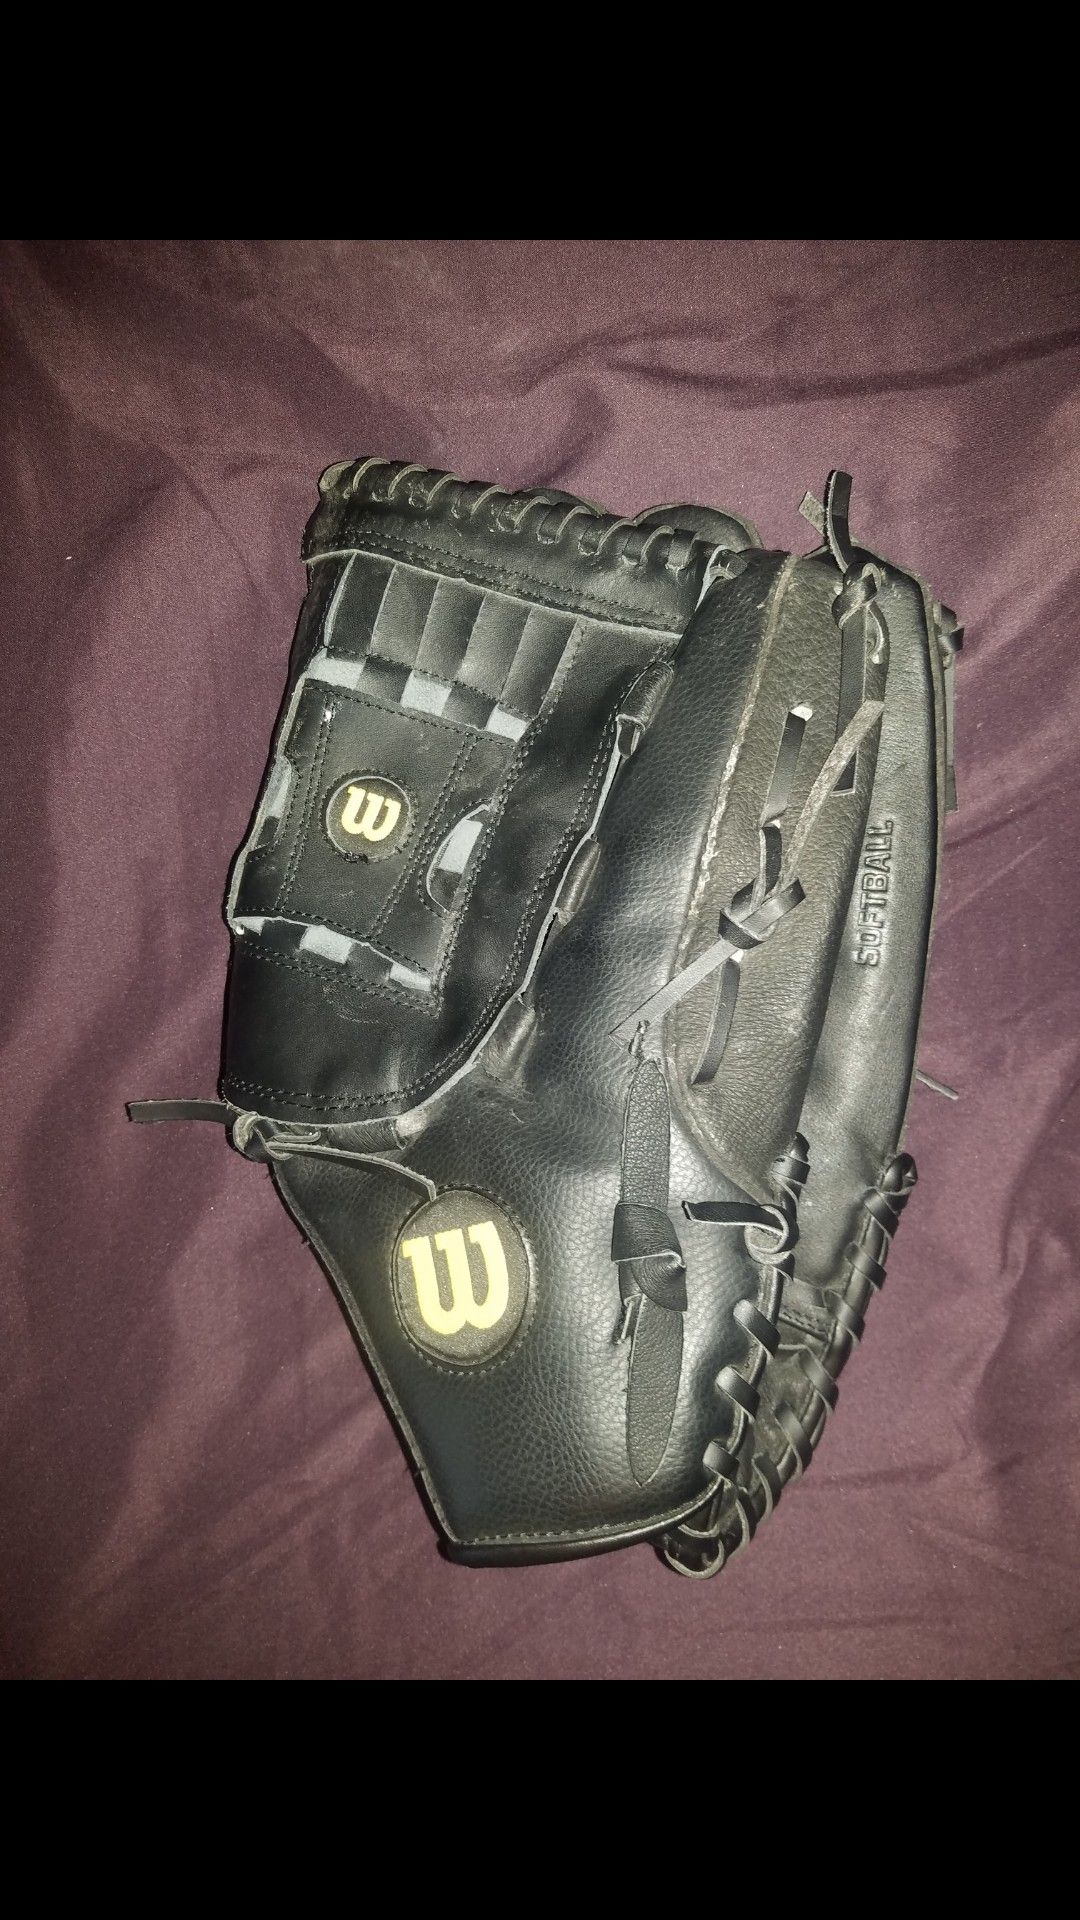 14" Wilson Elite softball mitt / glove